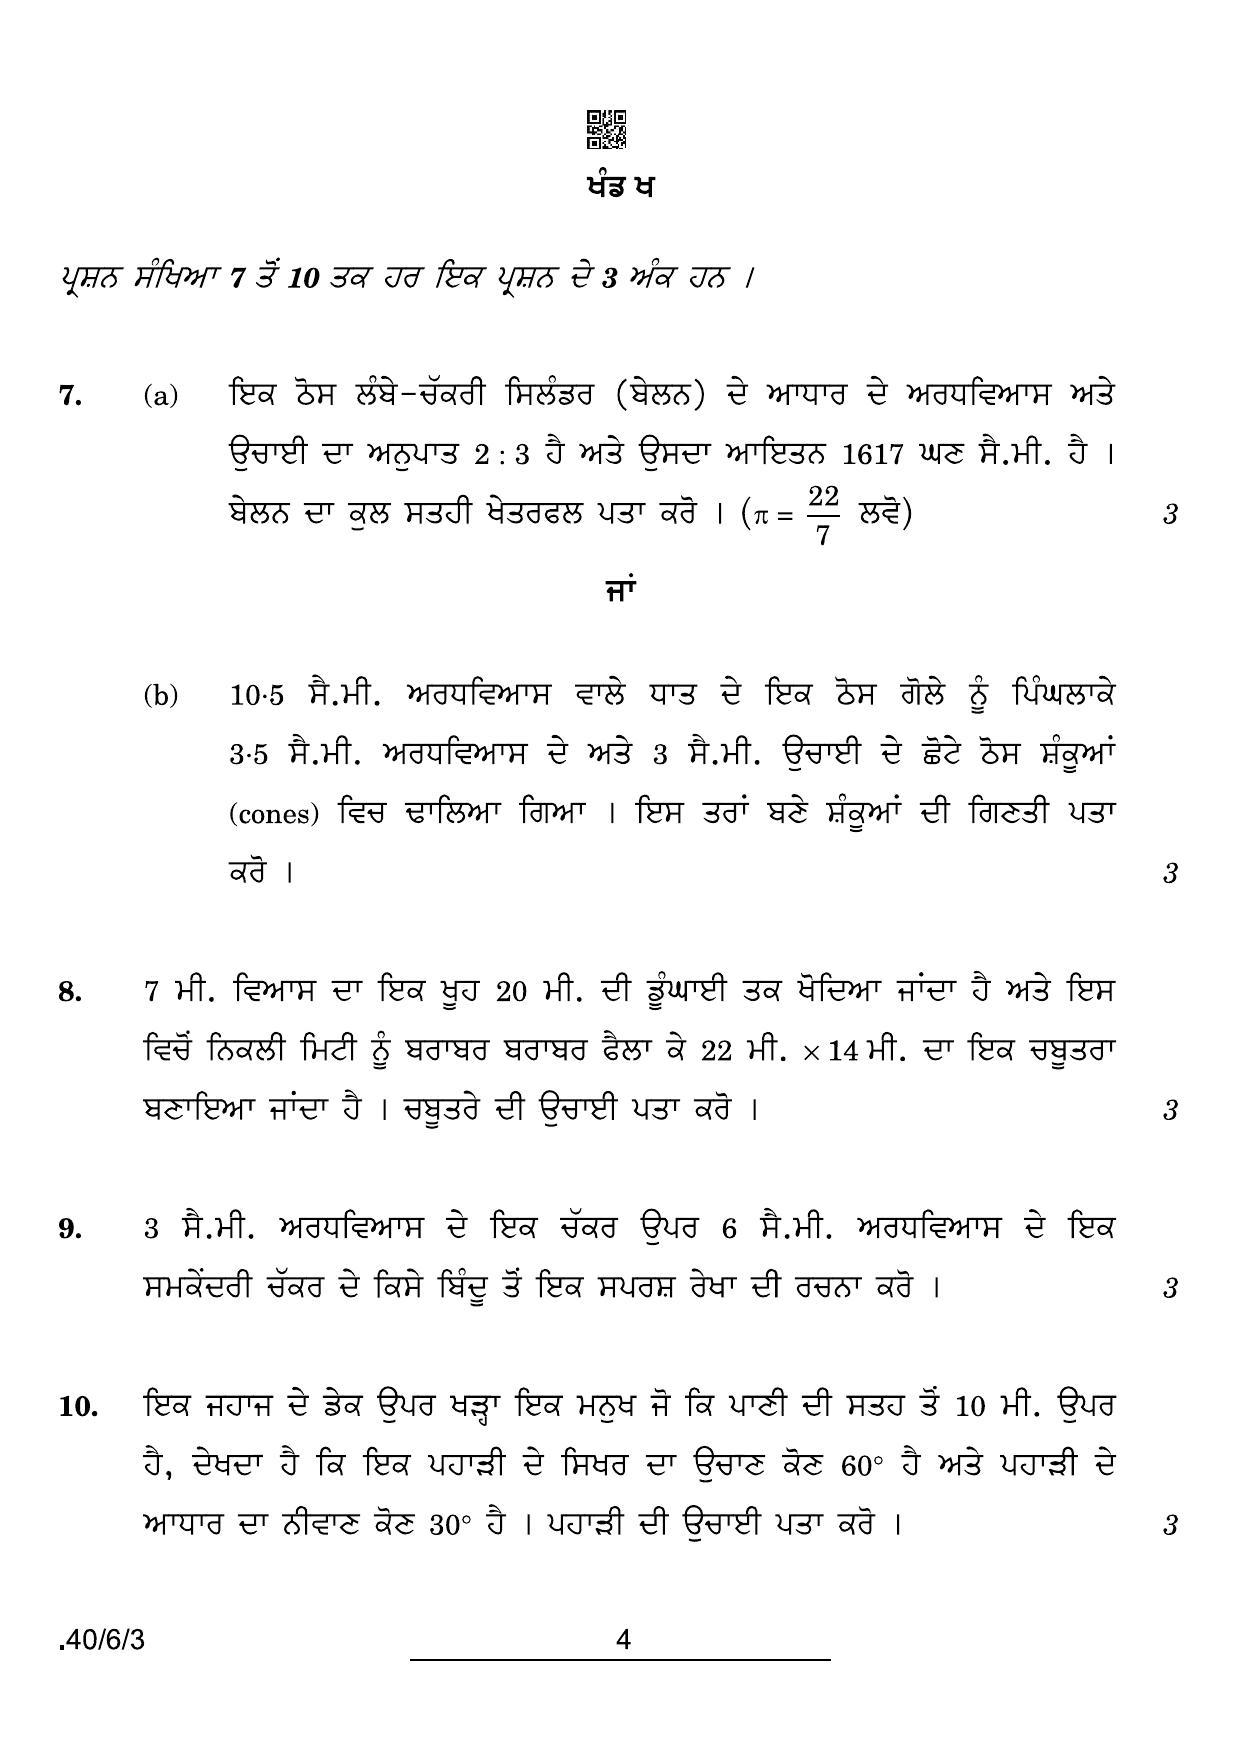 CBSE Class 10 40-6-3 Maths Std Punjabi 2022 Compartment Question Paper - Page 4